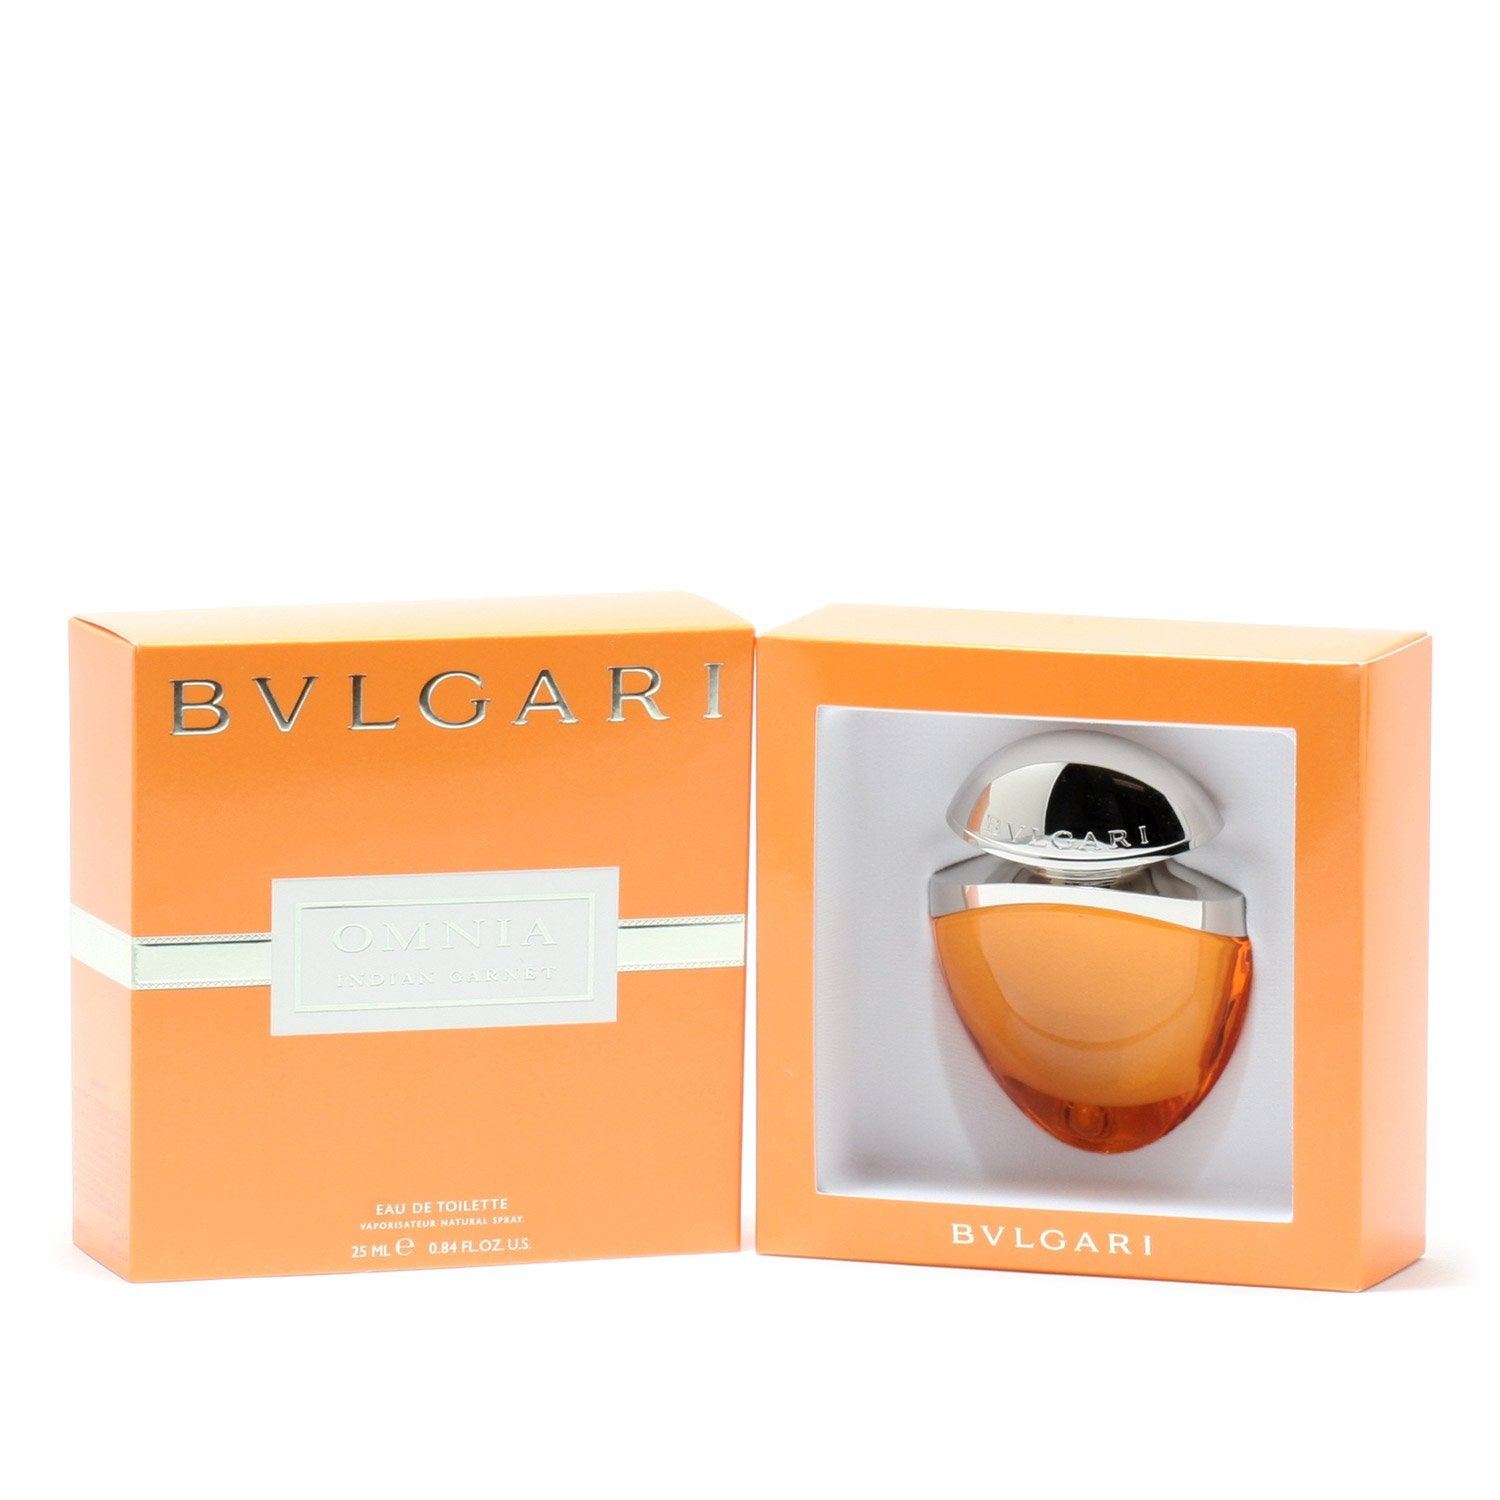 Perfume - BVLGARI OMNIA GARNET JEWEL CHARM FOR WOMEN - EAU DE TOILETTE SPRAY, 0.84 OZ